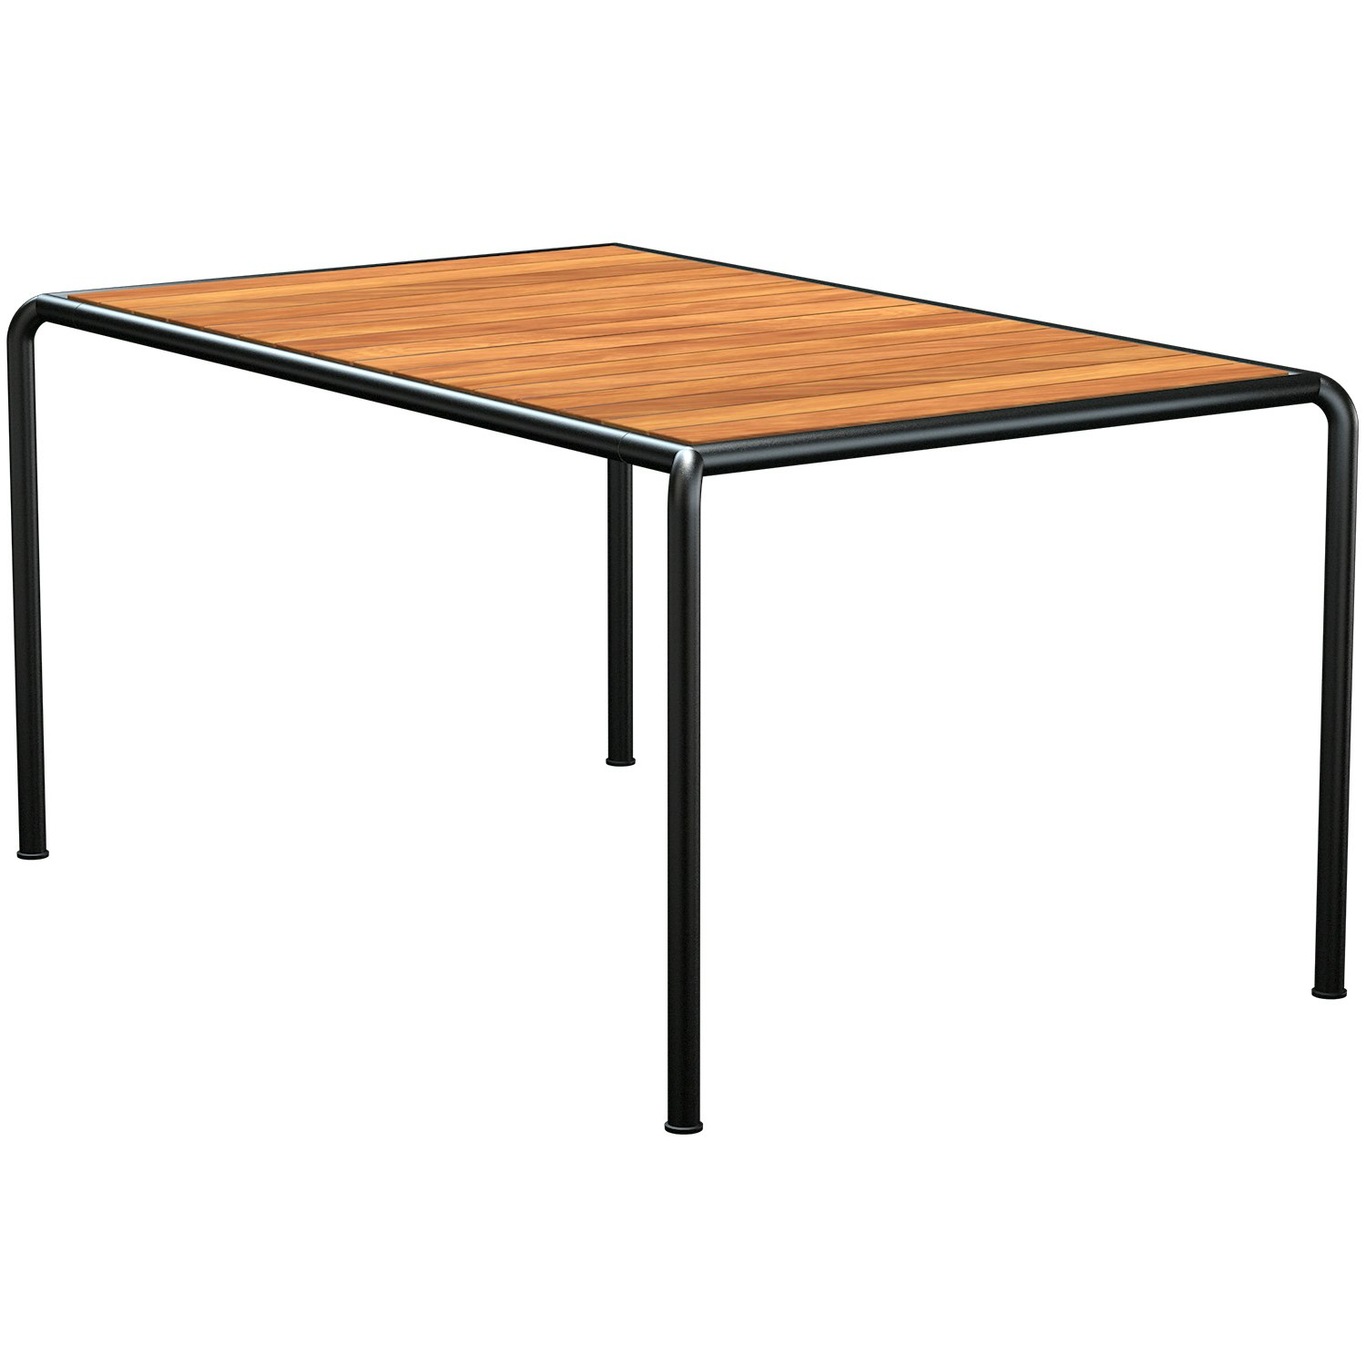 Avanti Dining Table 98x153 cm, Thermotreated Ash